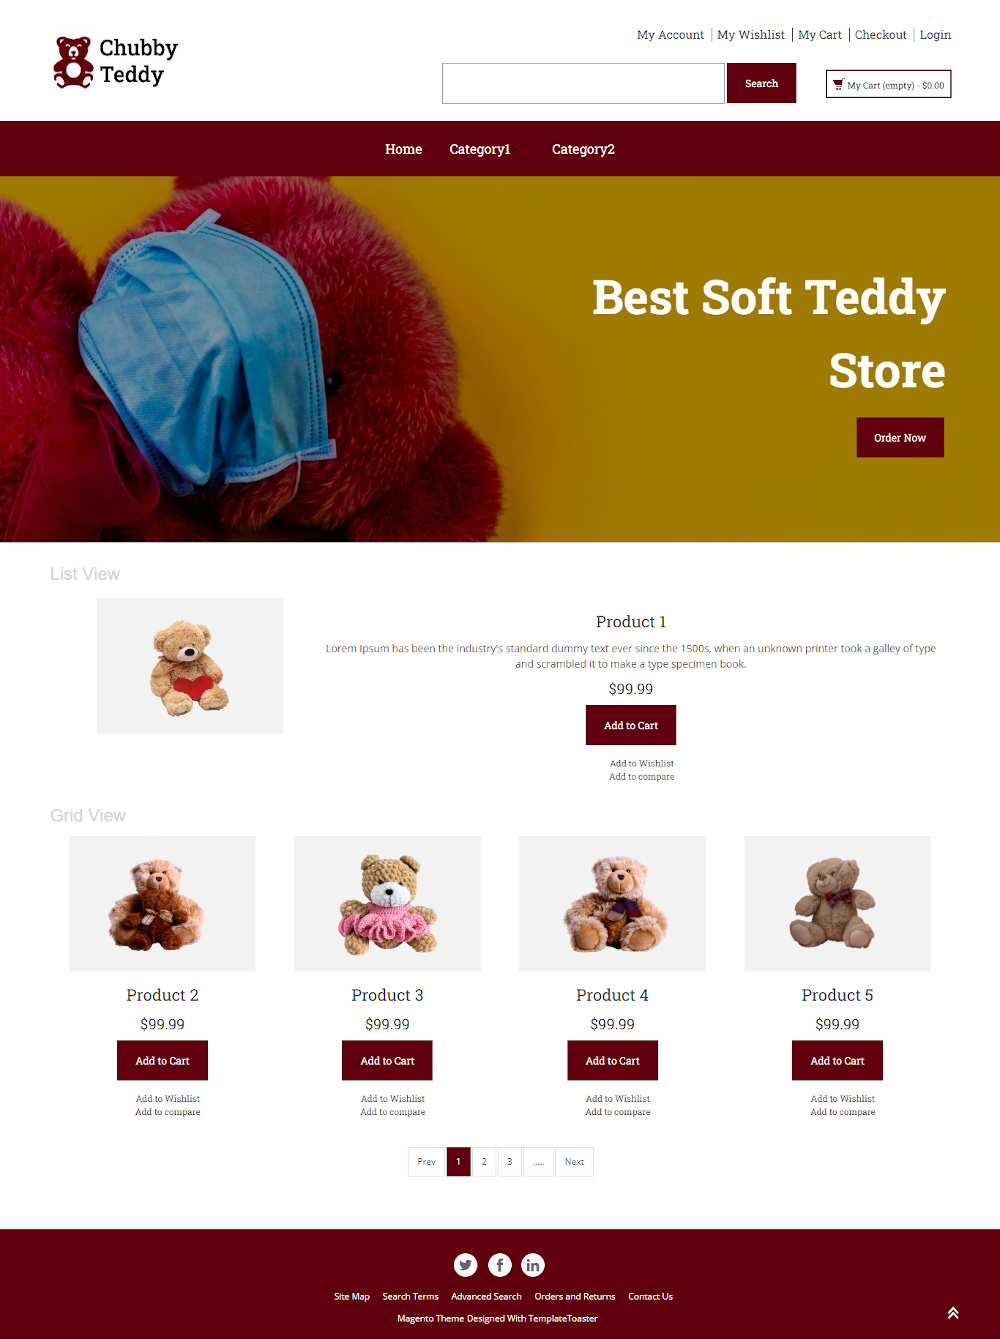 Chubby Teddy - Online Soft Teddy Store Magento Theme